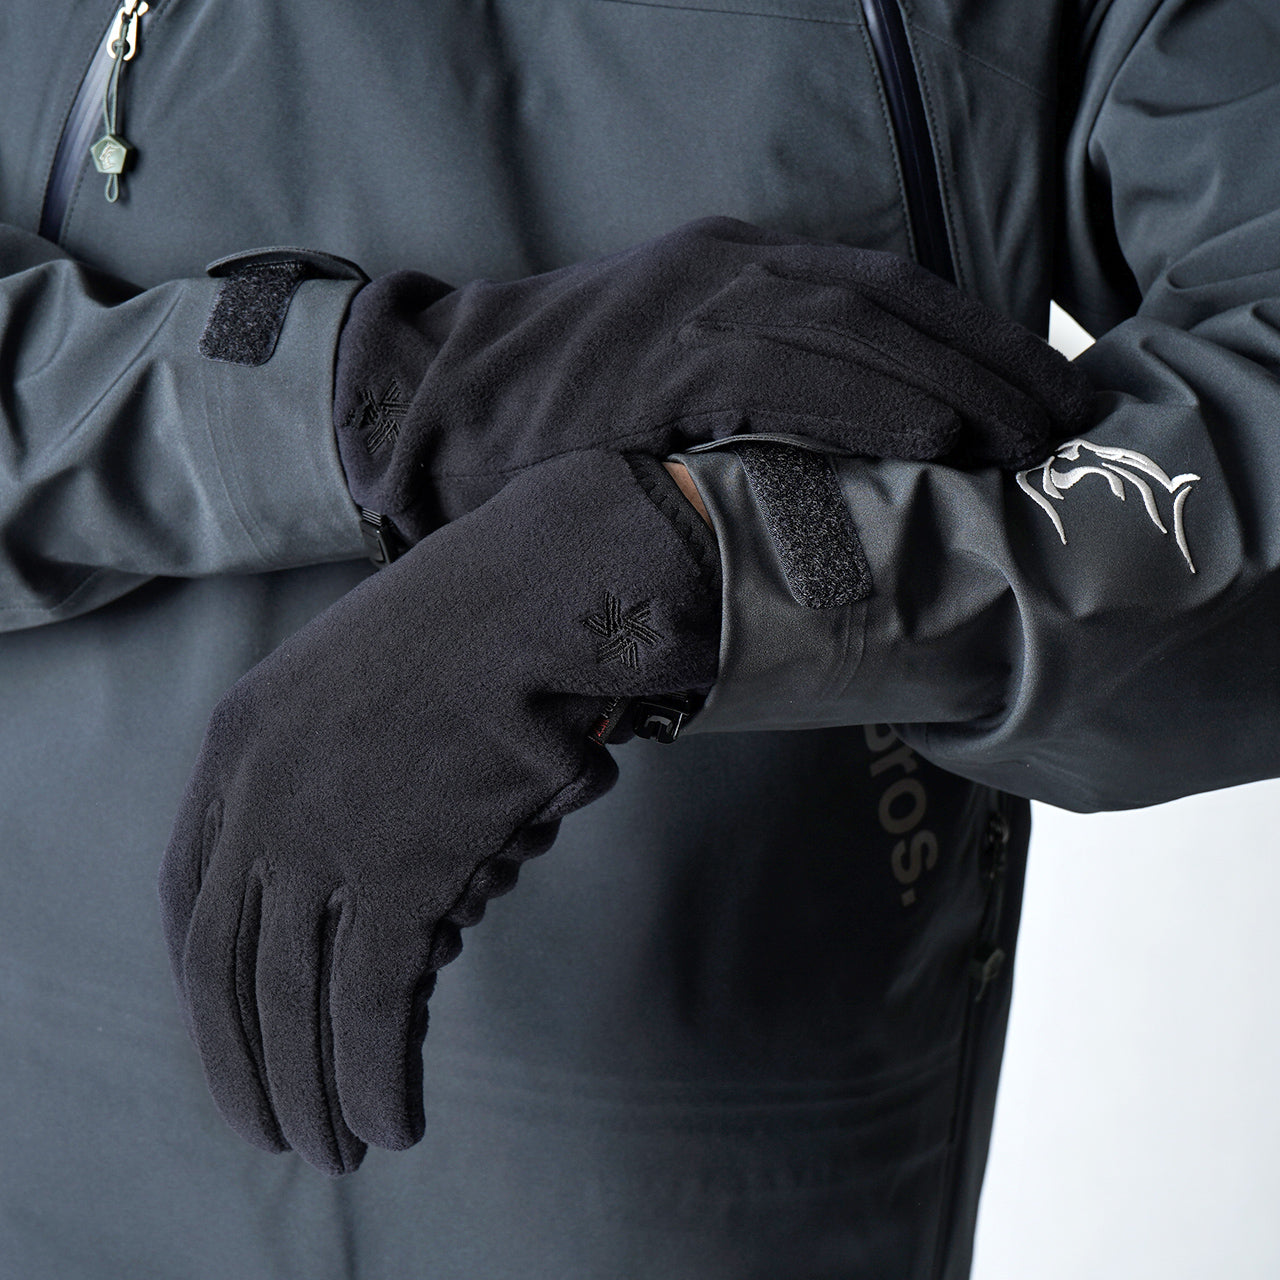 Goldwin ゴールドウィン ポーラテック マイクロ フリース グローブ POLARTEC Micro Fleece Gloves 手袋  GL93388【メール便可】